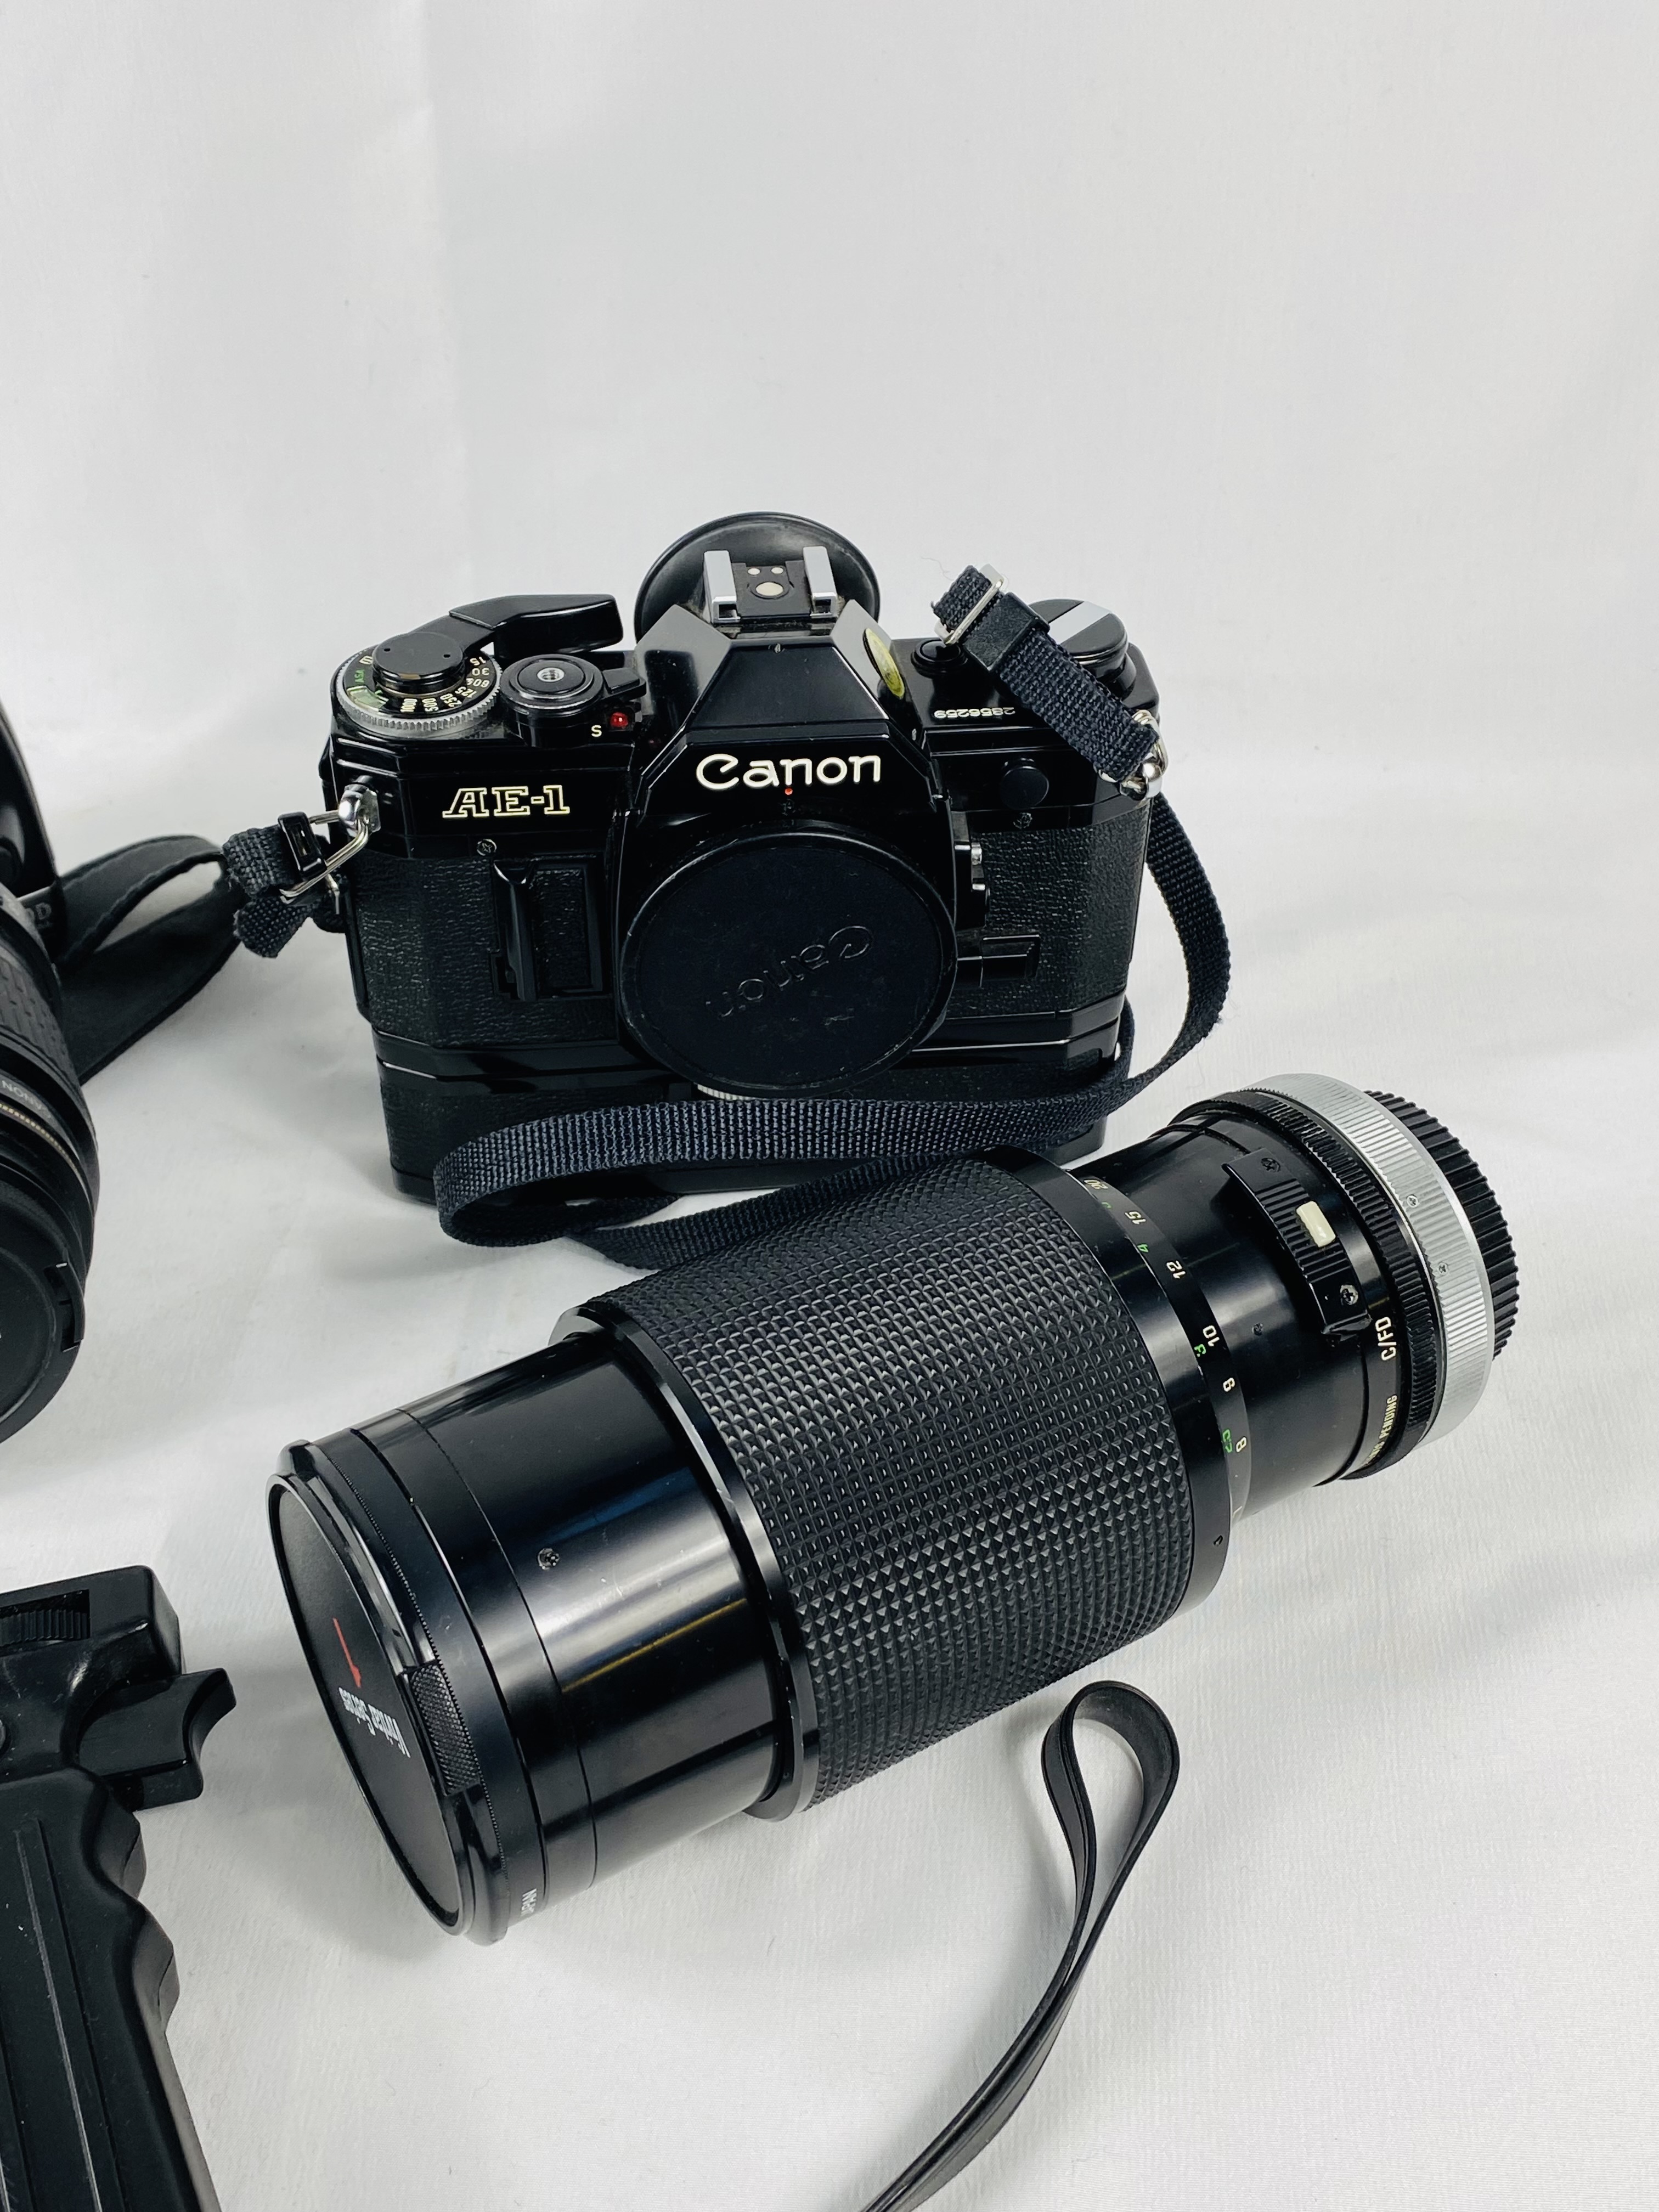 Canon EOS 400D camera and a Canon AE-1 camera - Image 2 of 4